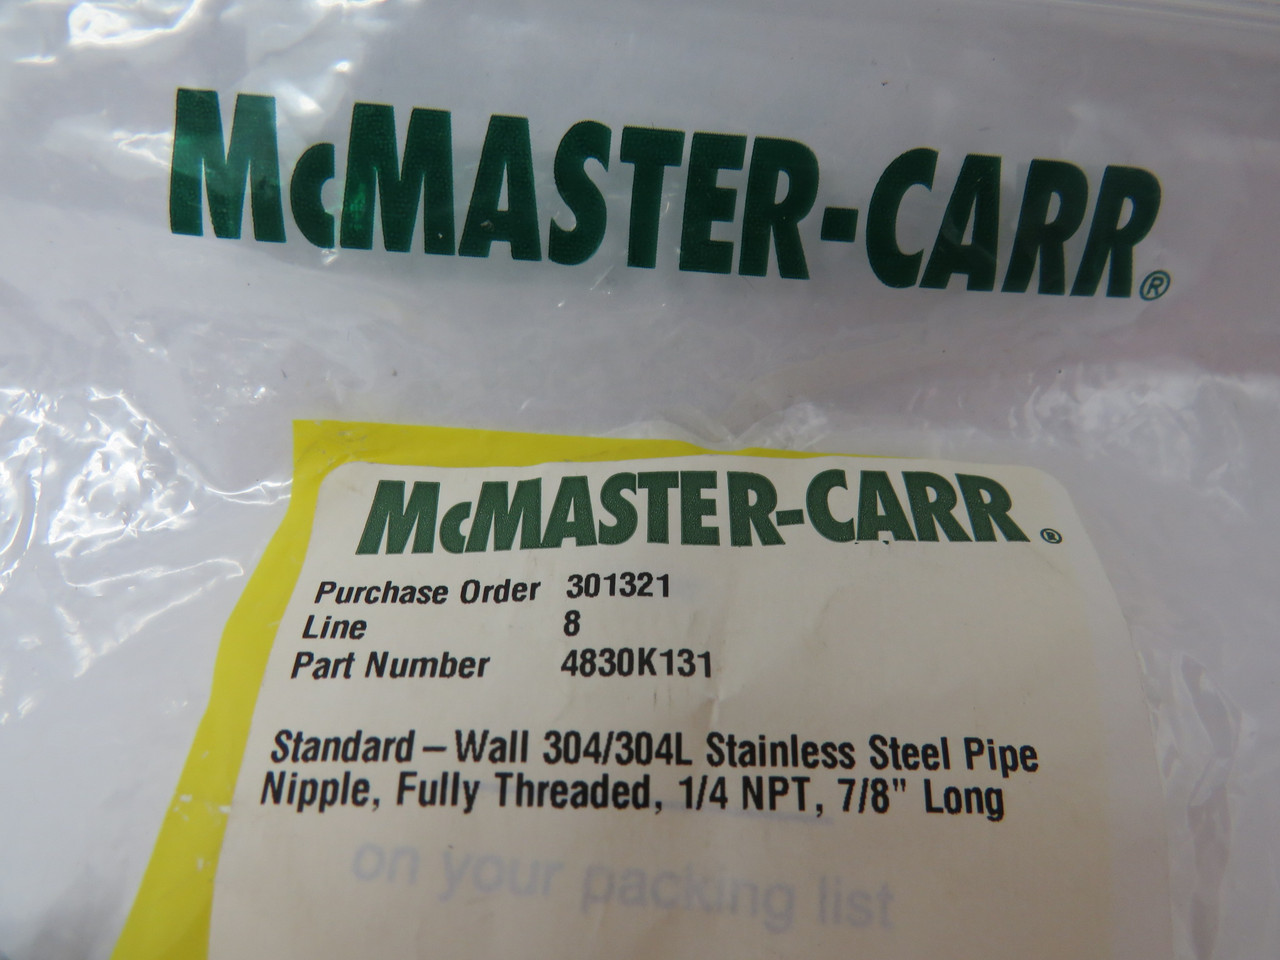 McMaster-Carr 4830K131 Standard SS Pipe Nipple 1/4 NPT 7/8" NPT Lot of 9 NWB